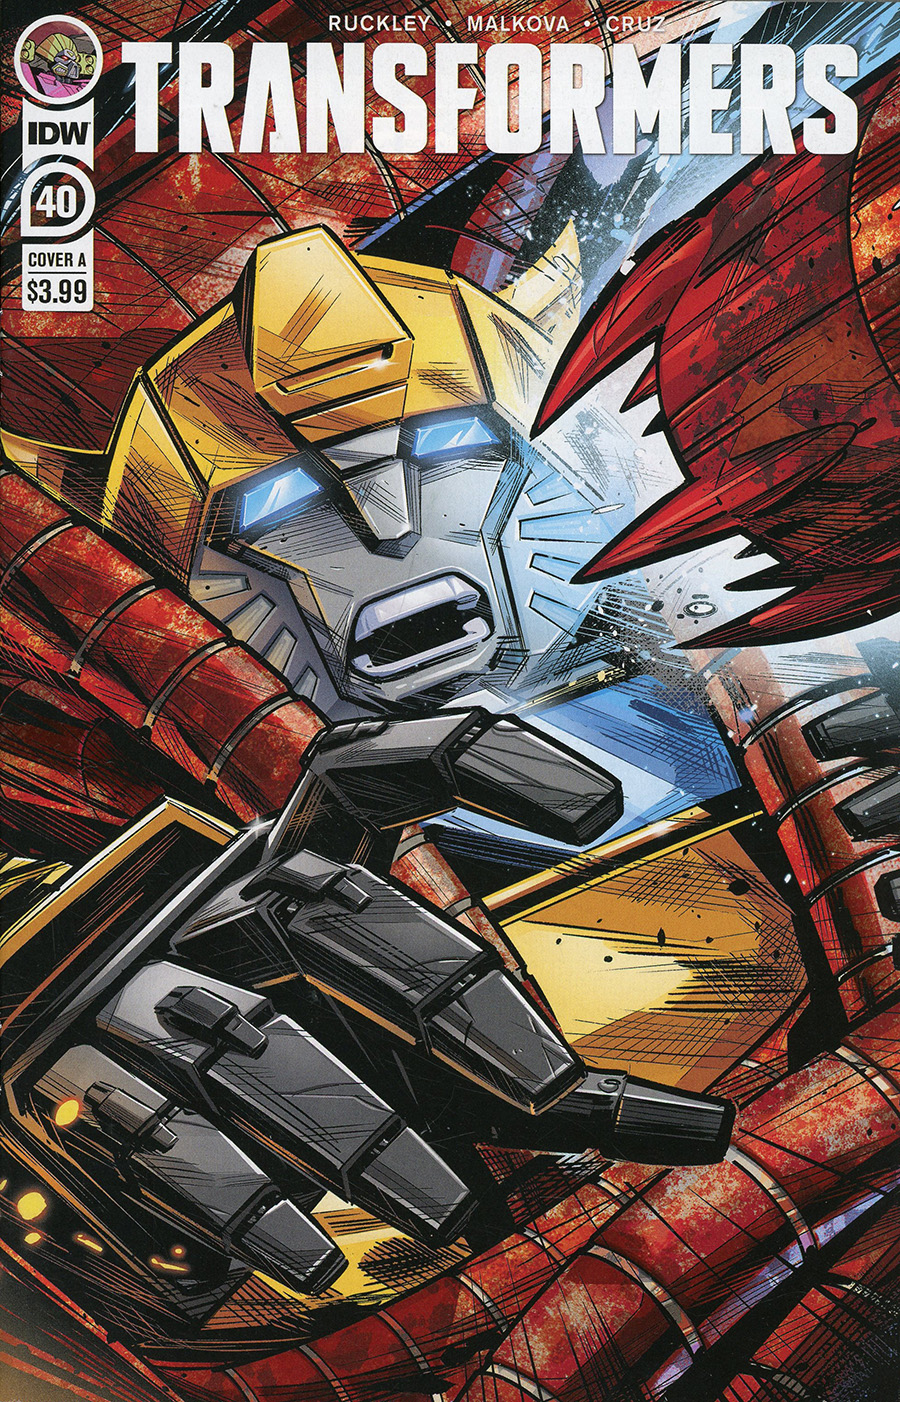 Transformers Vol 4 #40 Cover A Regular Angel Hernandez Cover